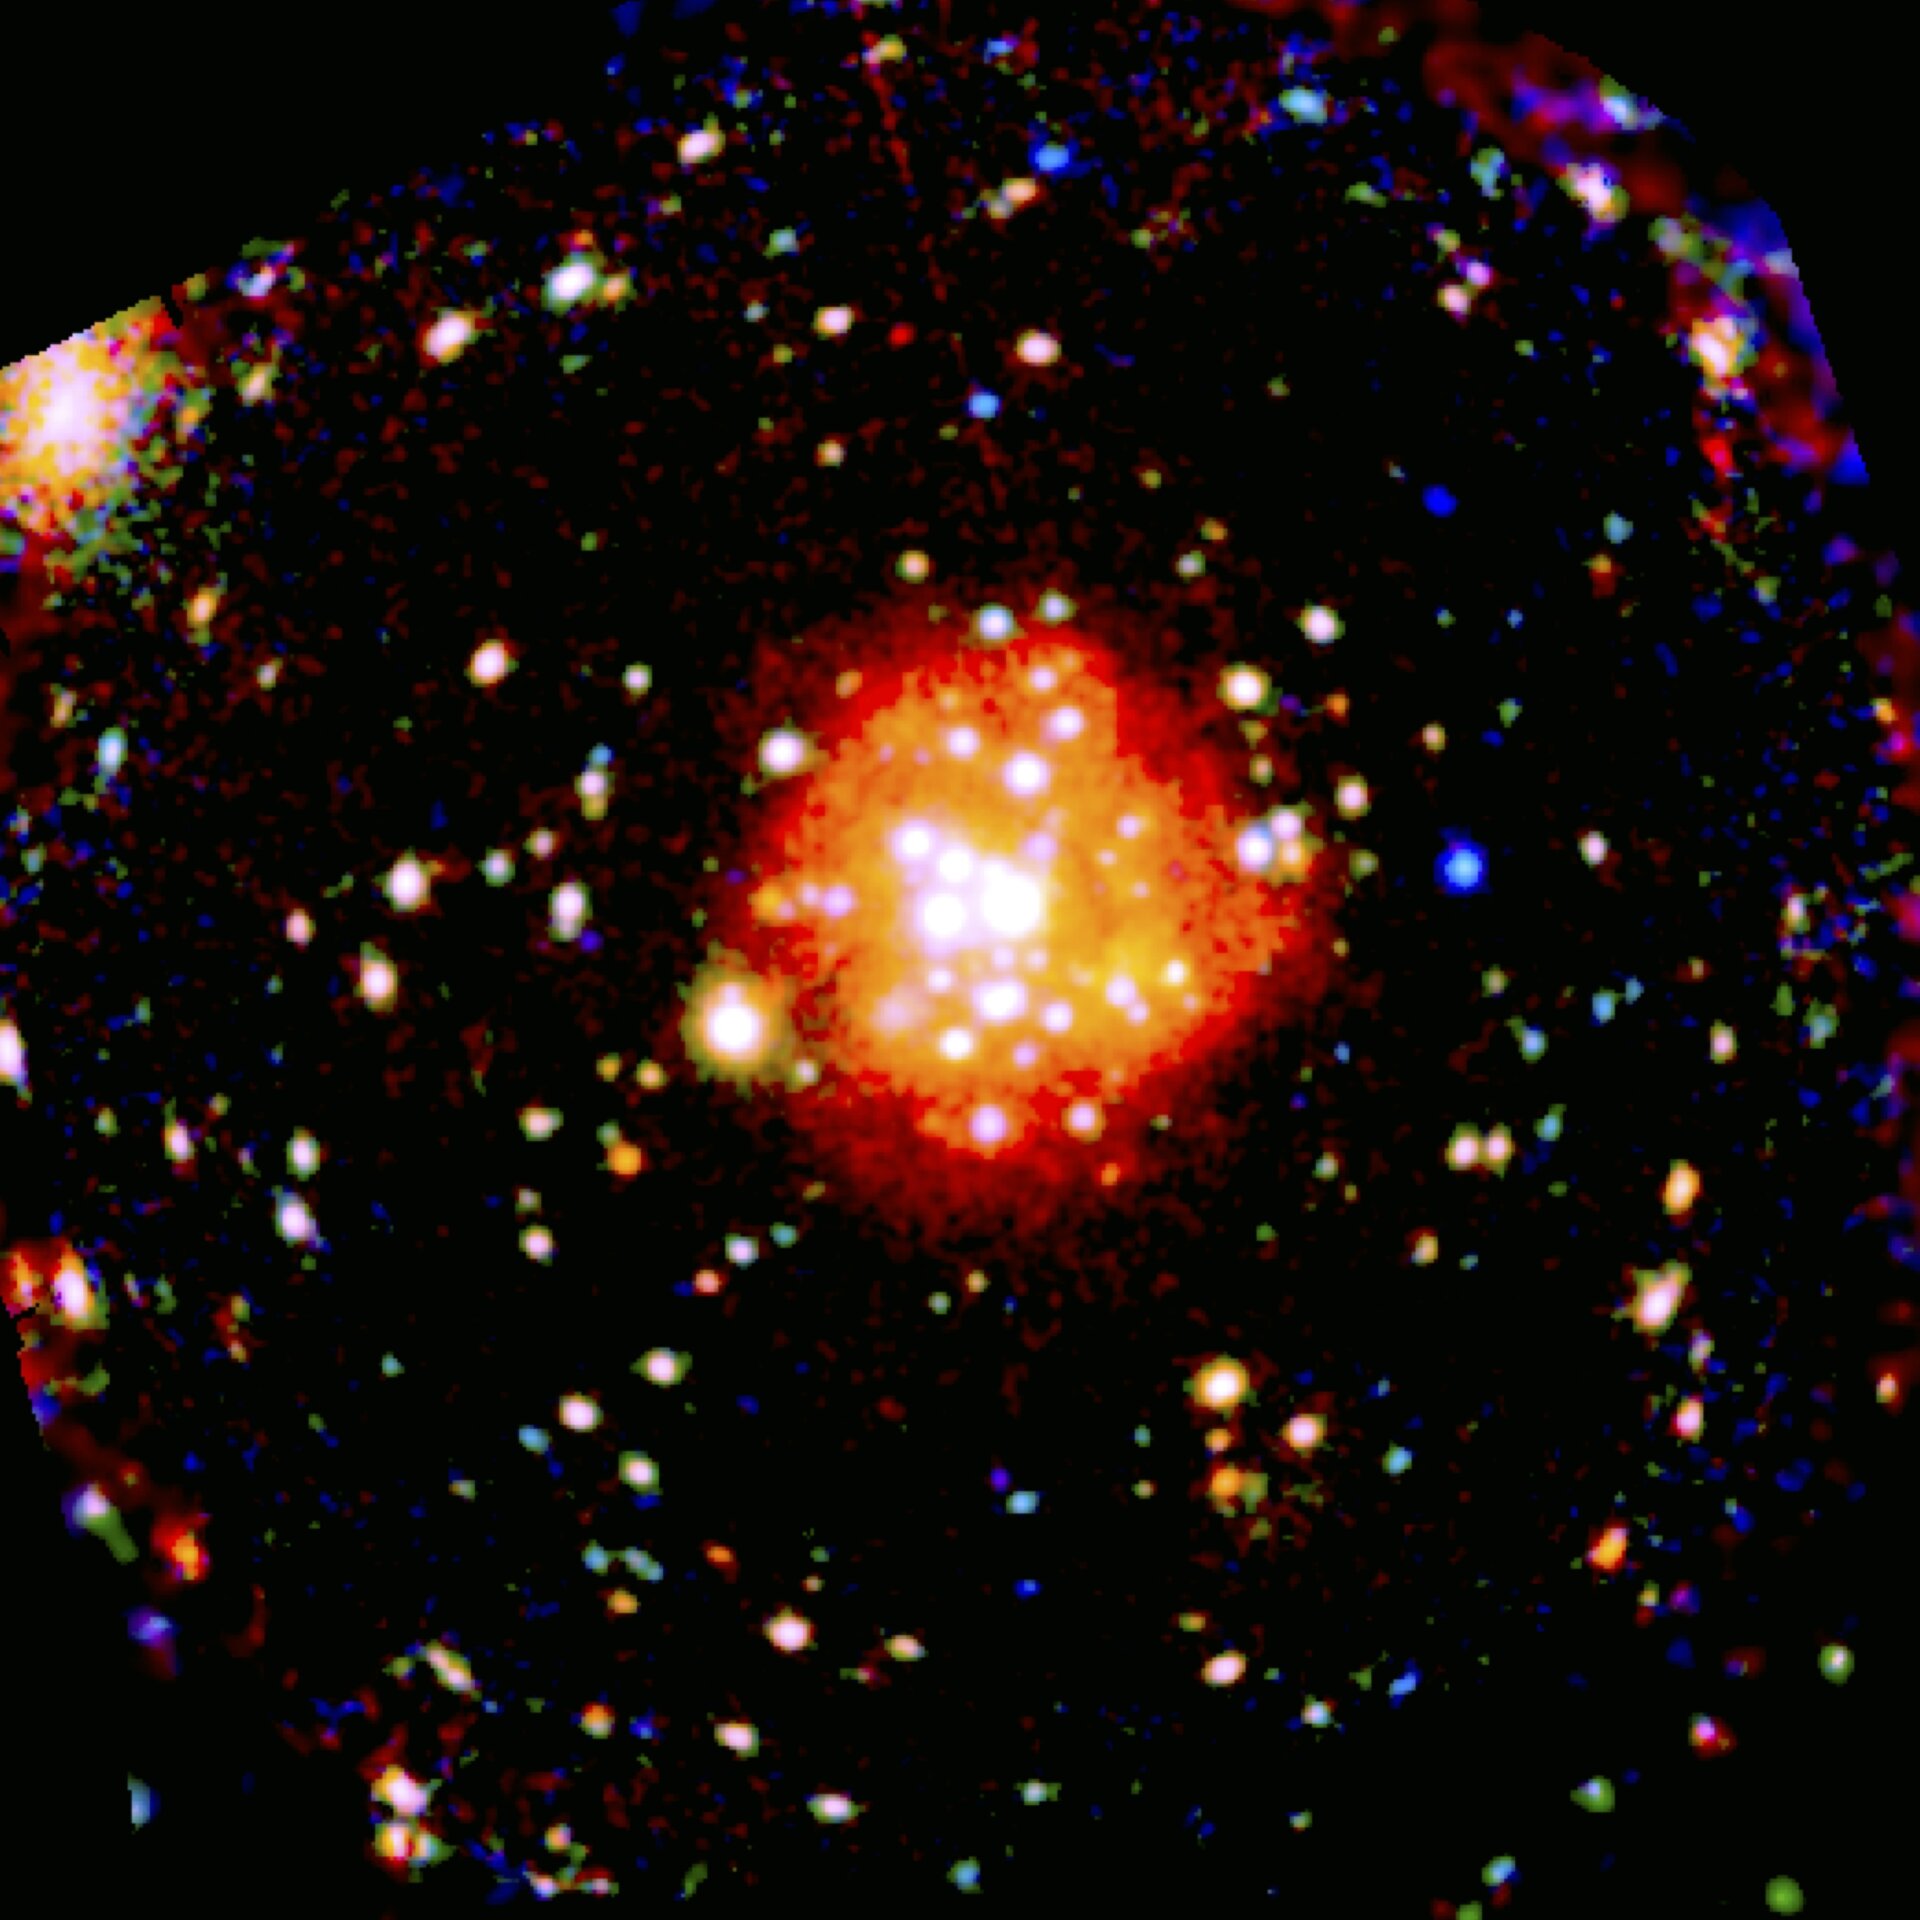 X-raying a galaxy’s stellar remnants